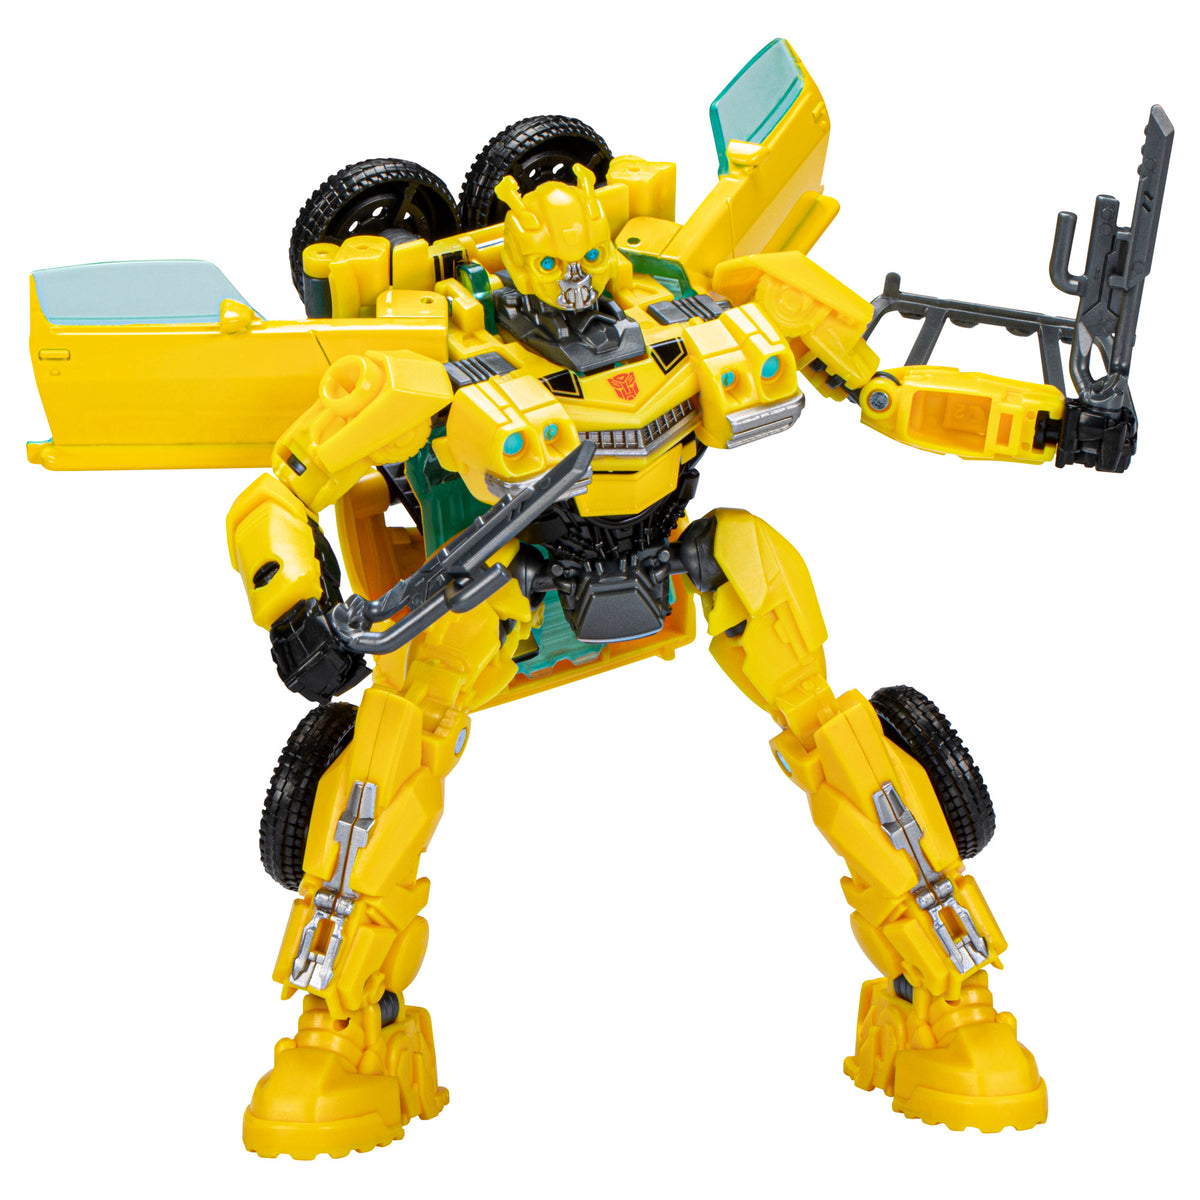 Transformers Ultimate Bumblebee Camaro Electronic Action Figure